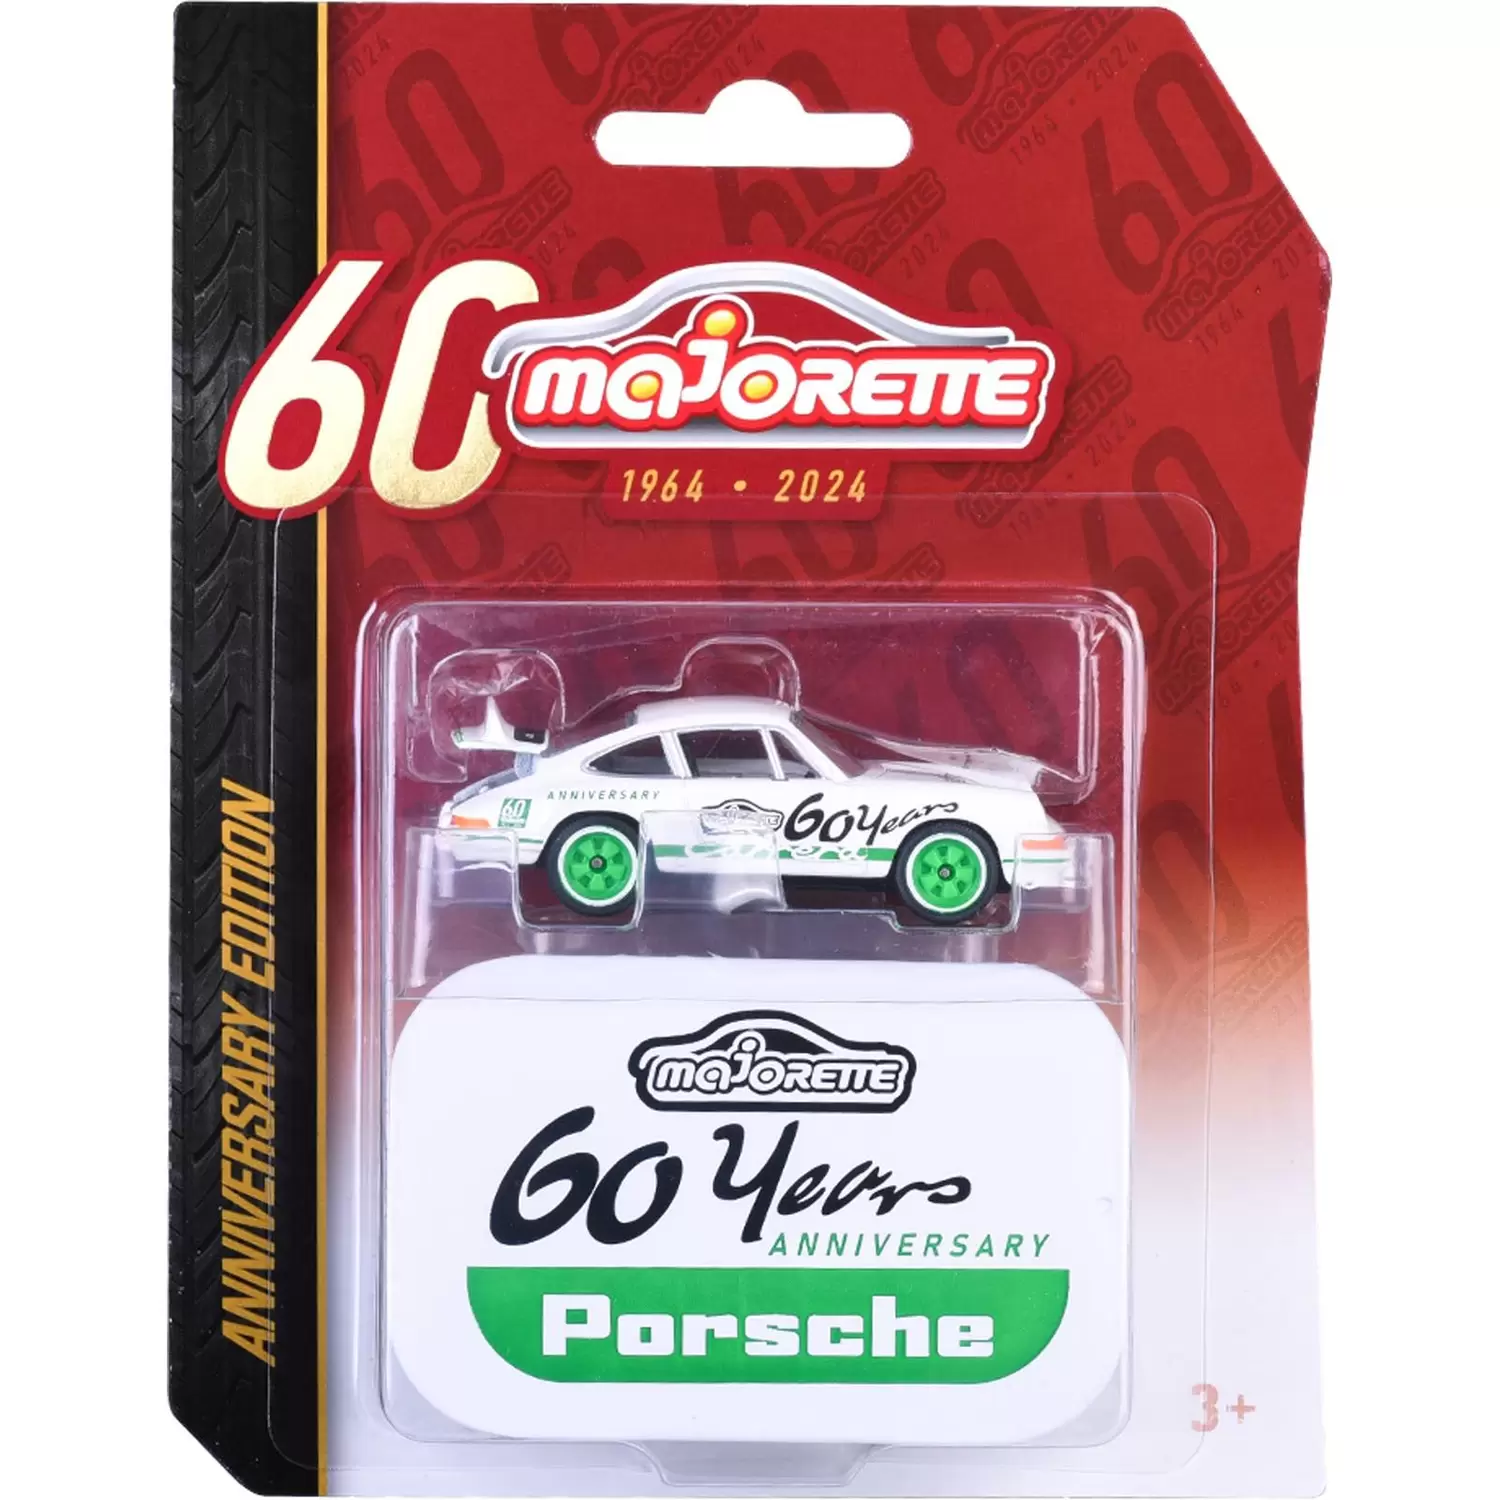 Majorette 1/64 60 Years Anniversary Edition Porsche 911 Carrera 212054102 - Thumbnail